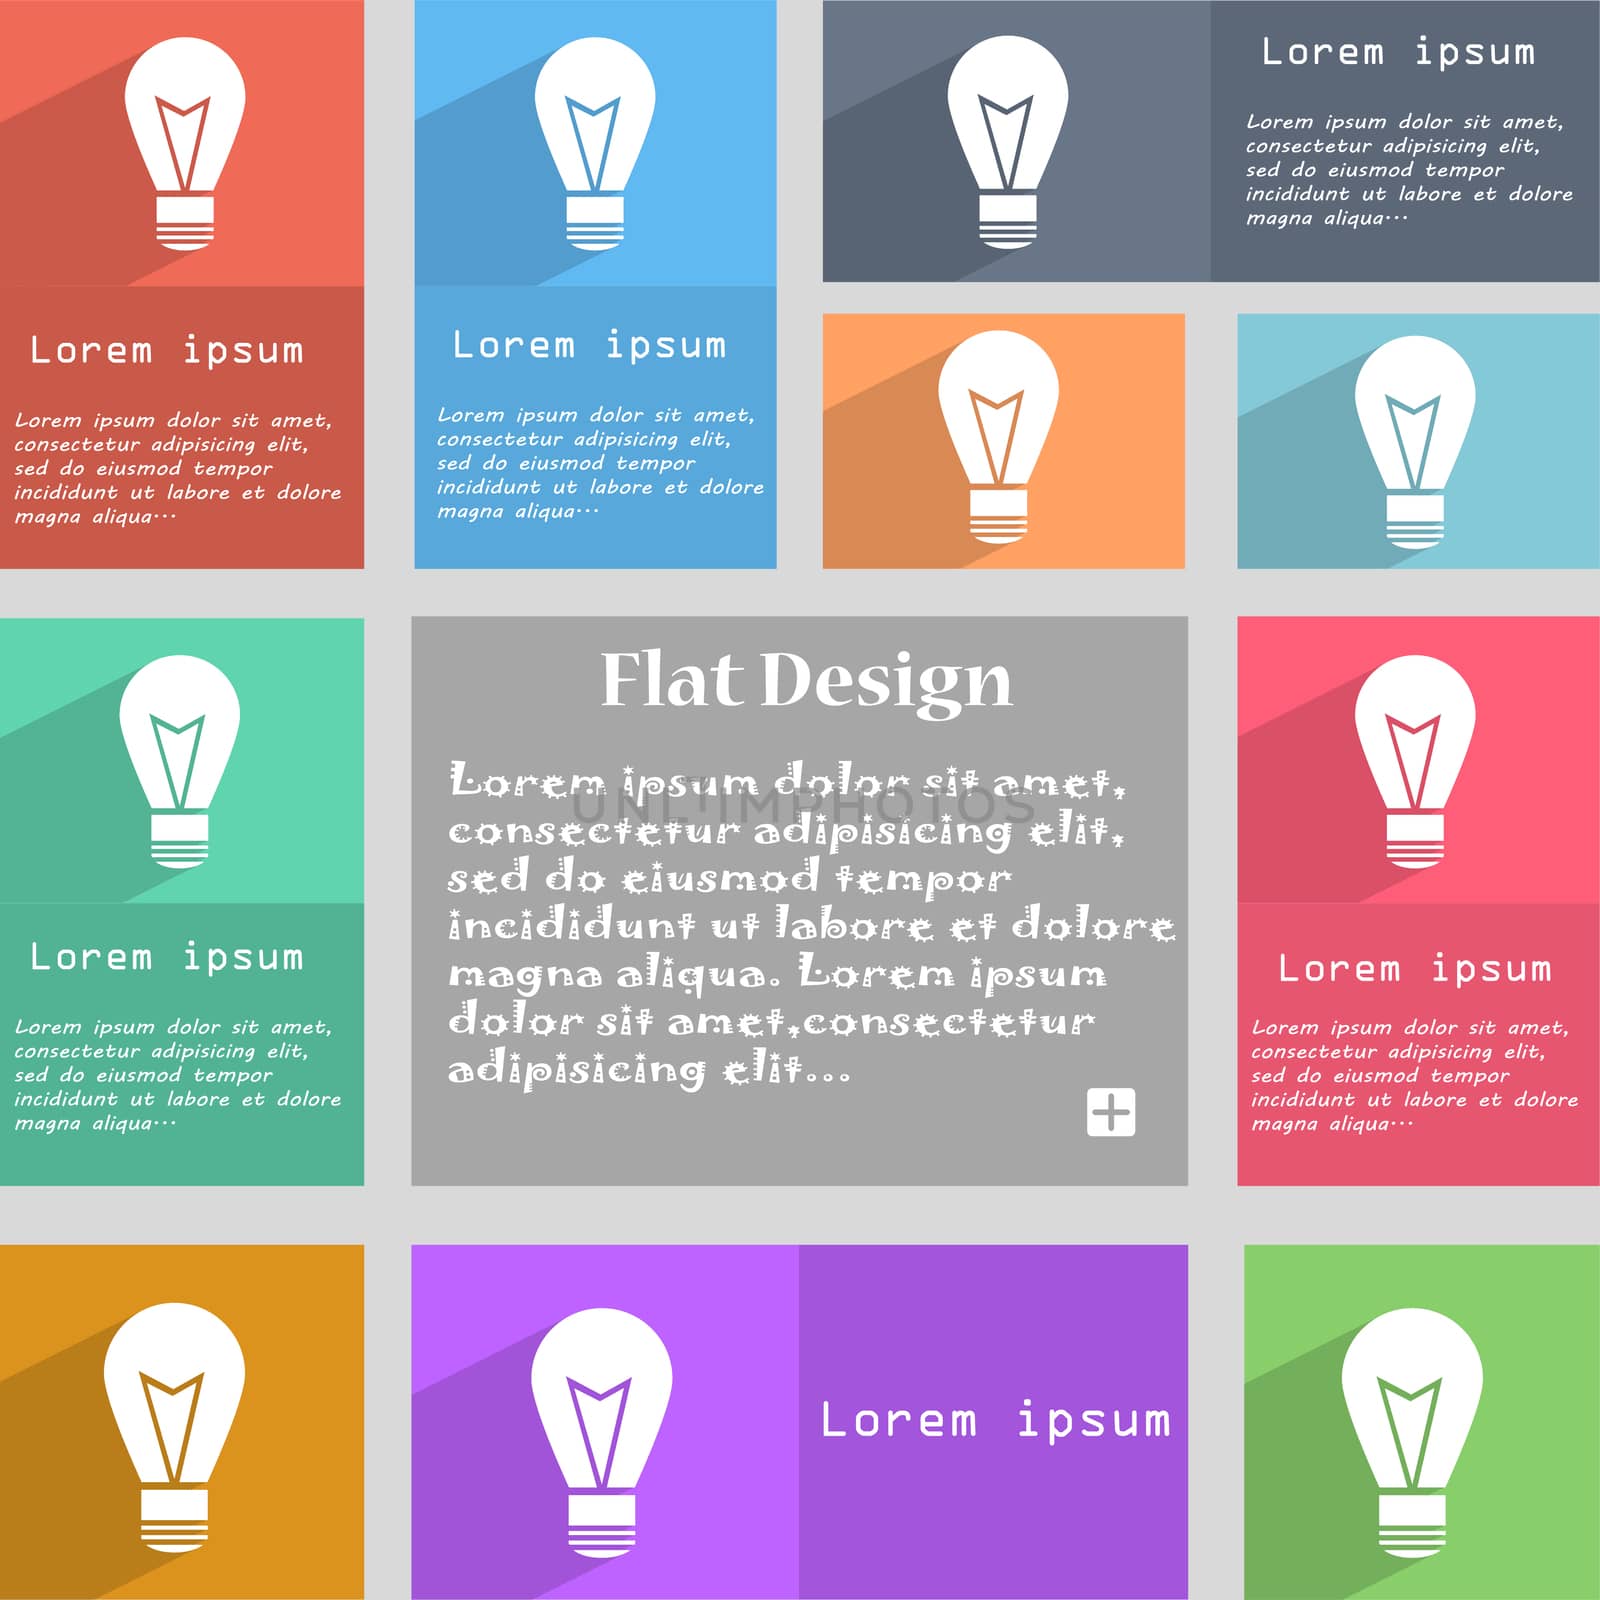 Light lamp sign icon. Idea symbol. Lightis on. Set of colored buttons. illustration